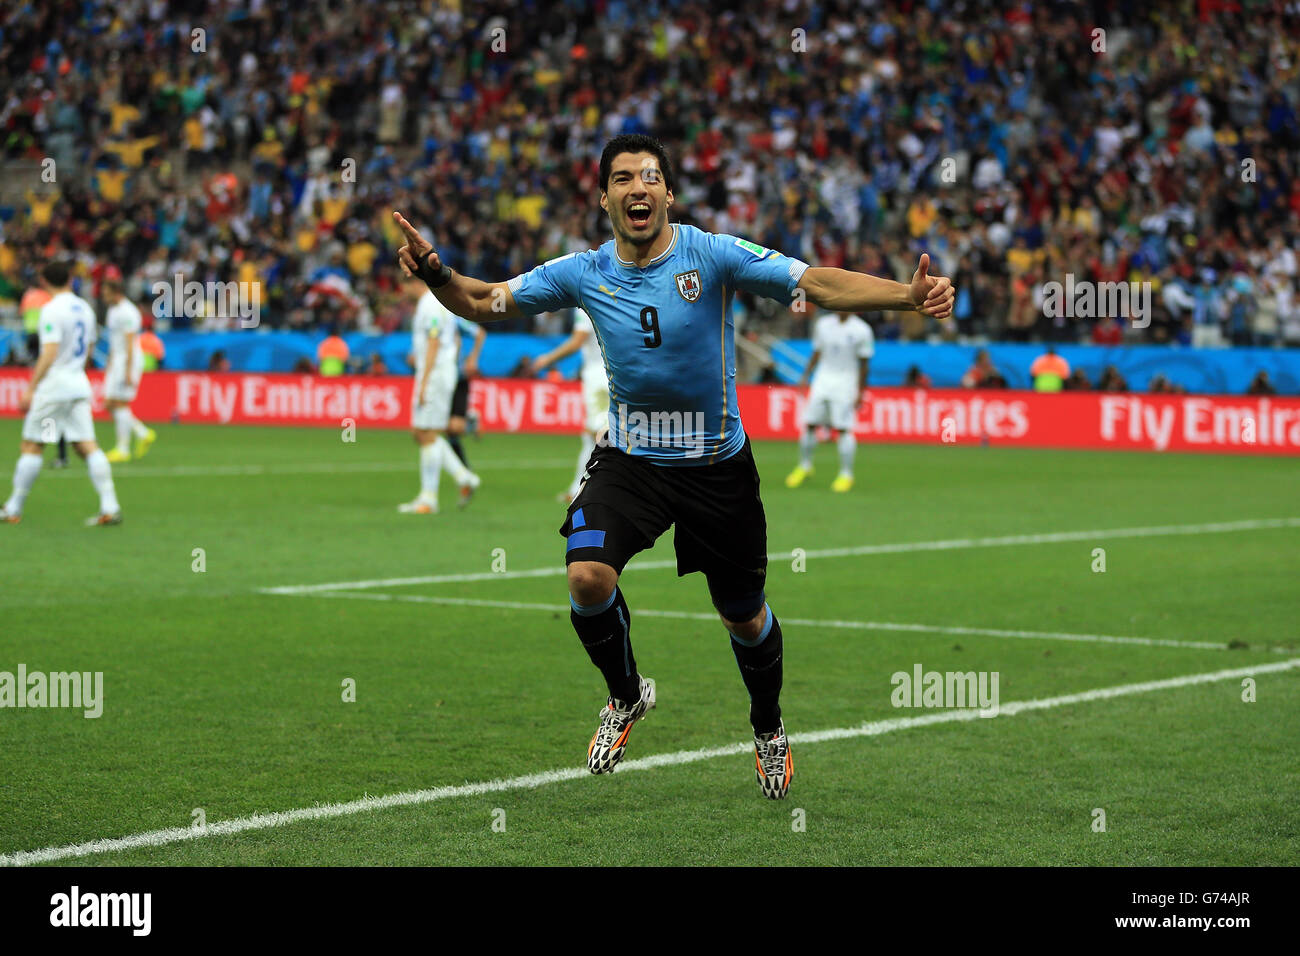 Uruguay's Luis Suarez celebrates scoring the opening goal during the Group D match the Estadio do Sao Paulo, Sao Paulo, Brazil. Stock Photo